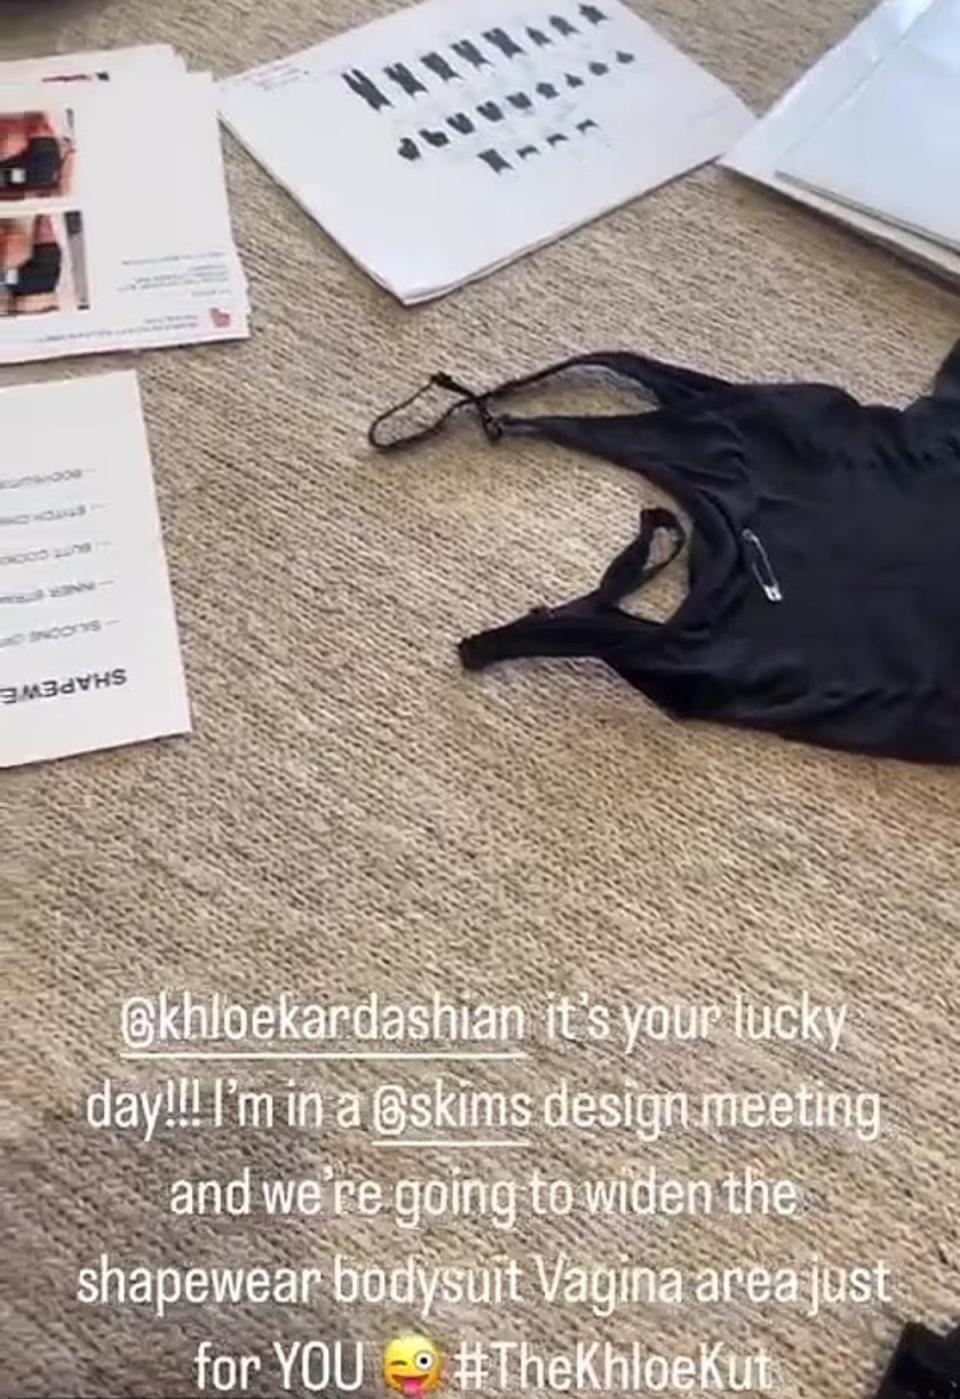  (Instagram/@kimkardashian)